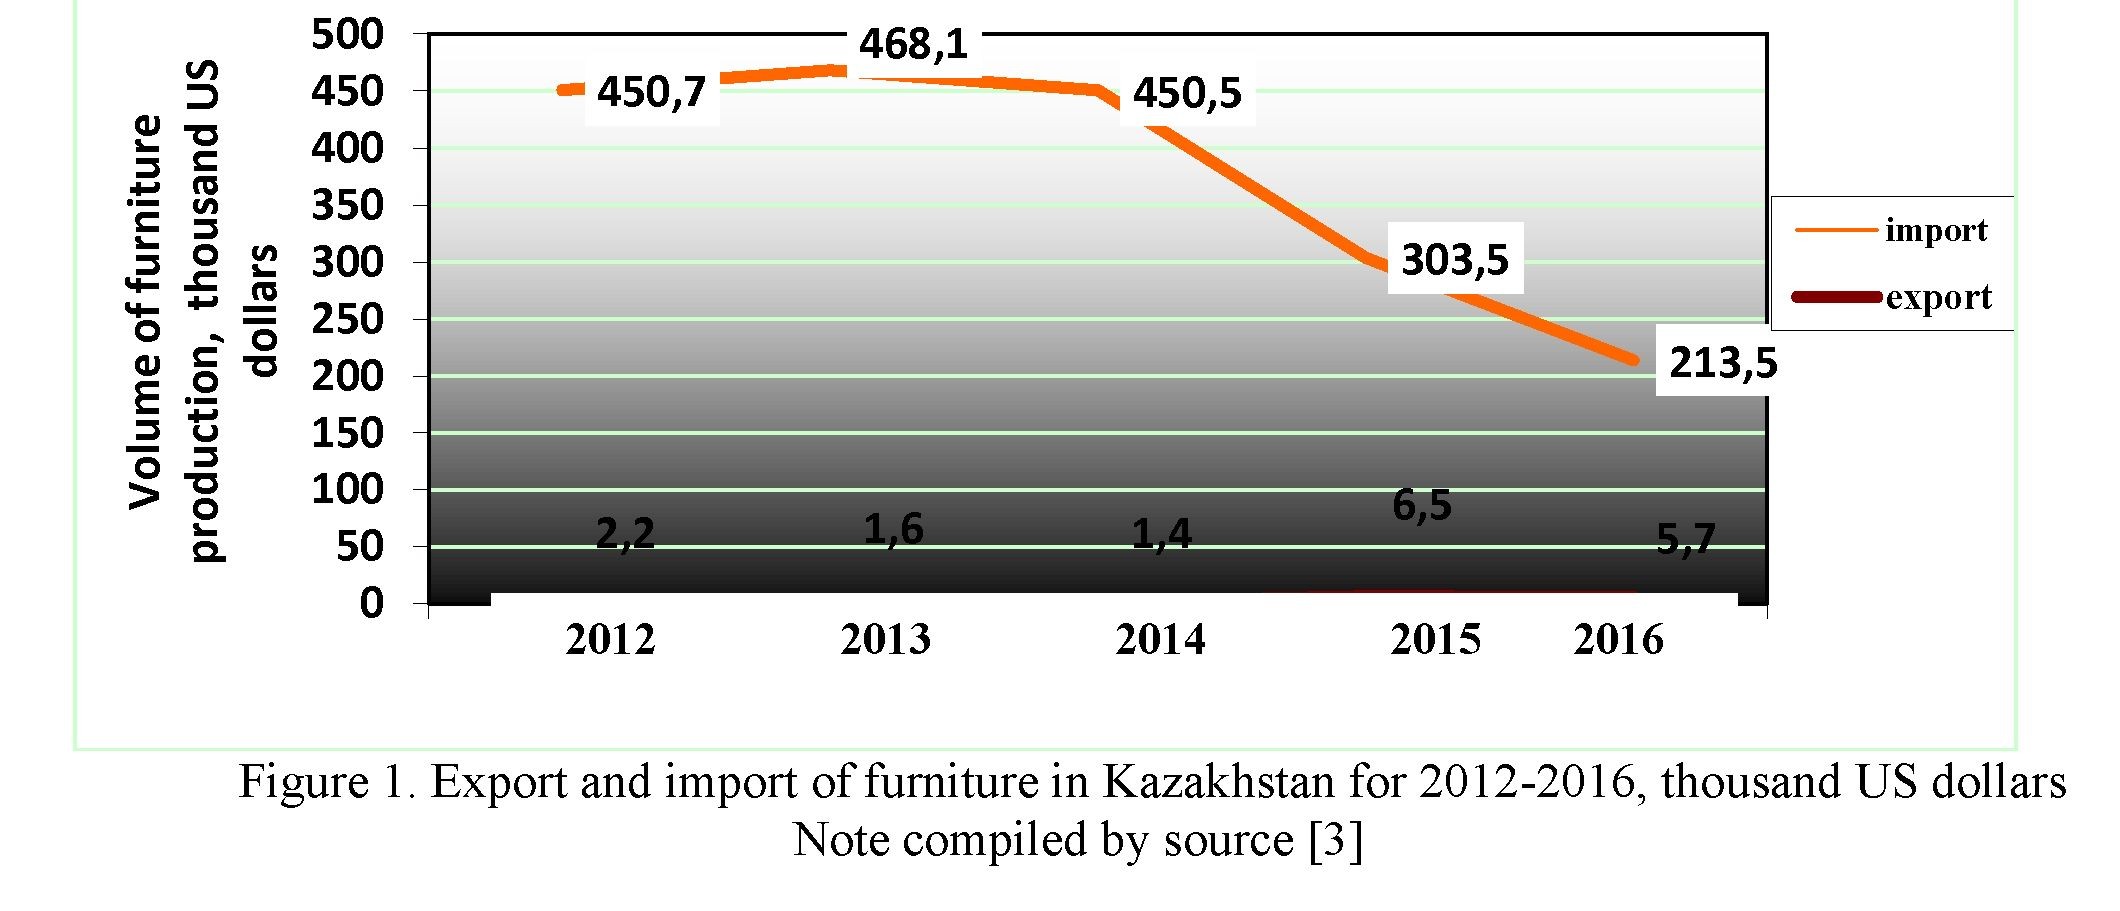 Modern status of furniture industry development in Kazakhstan